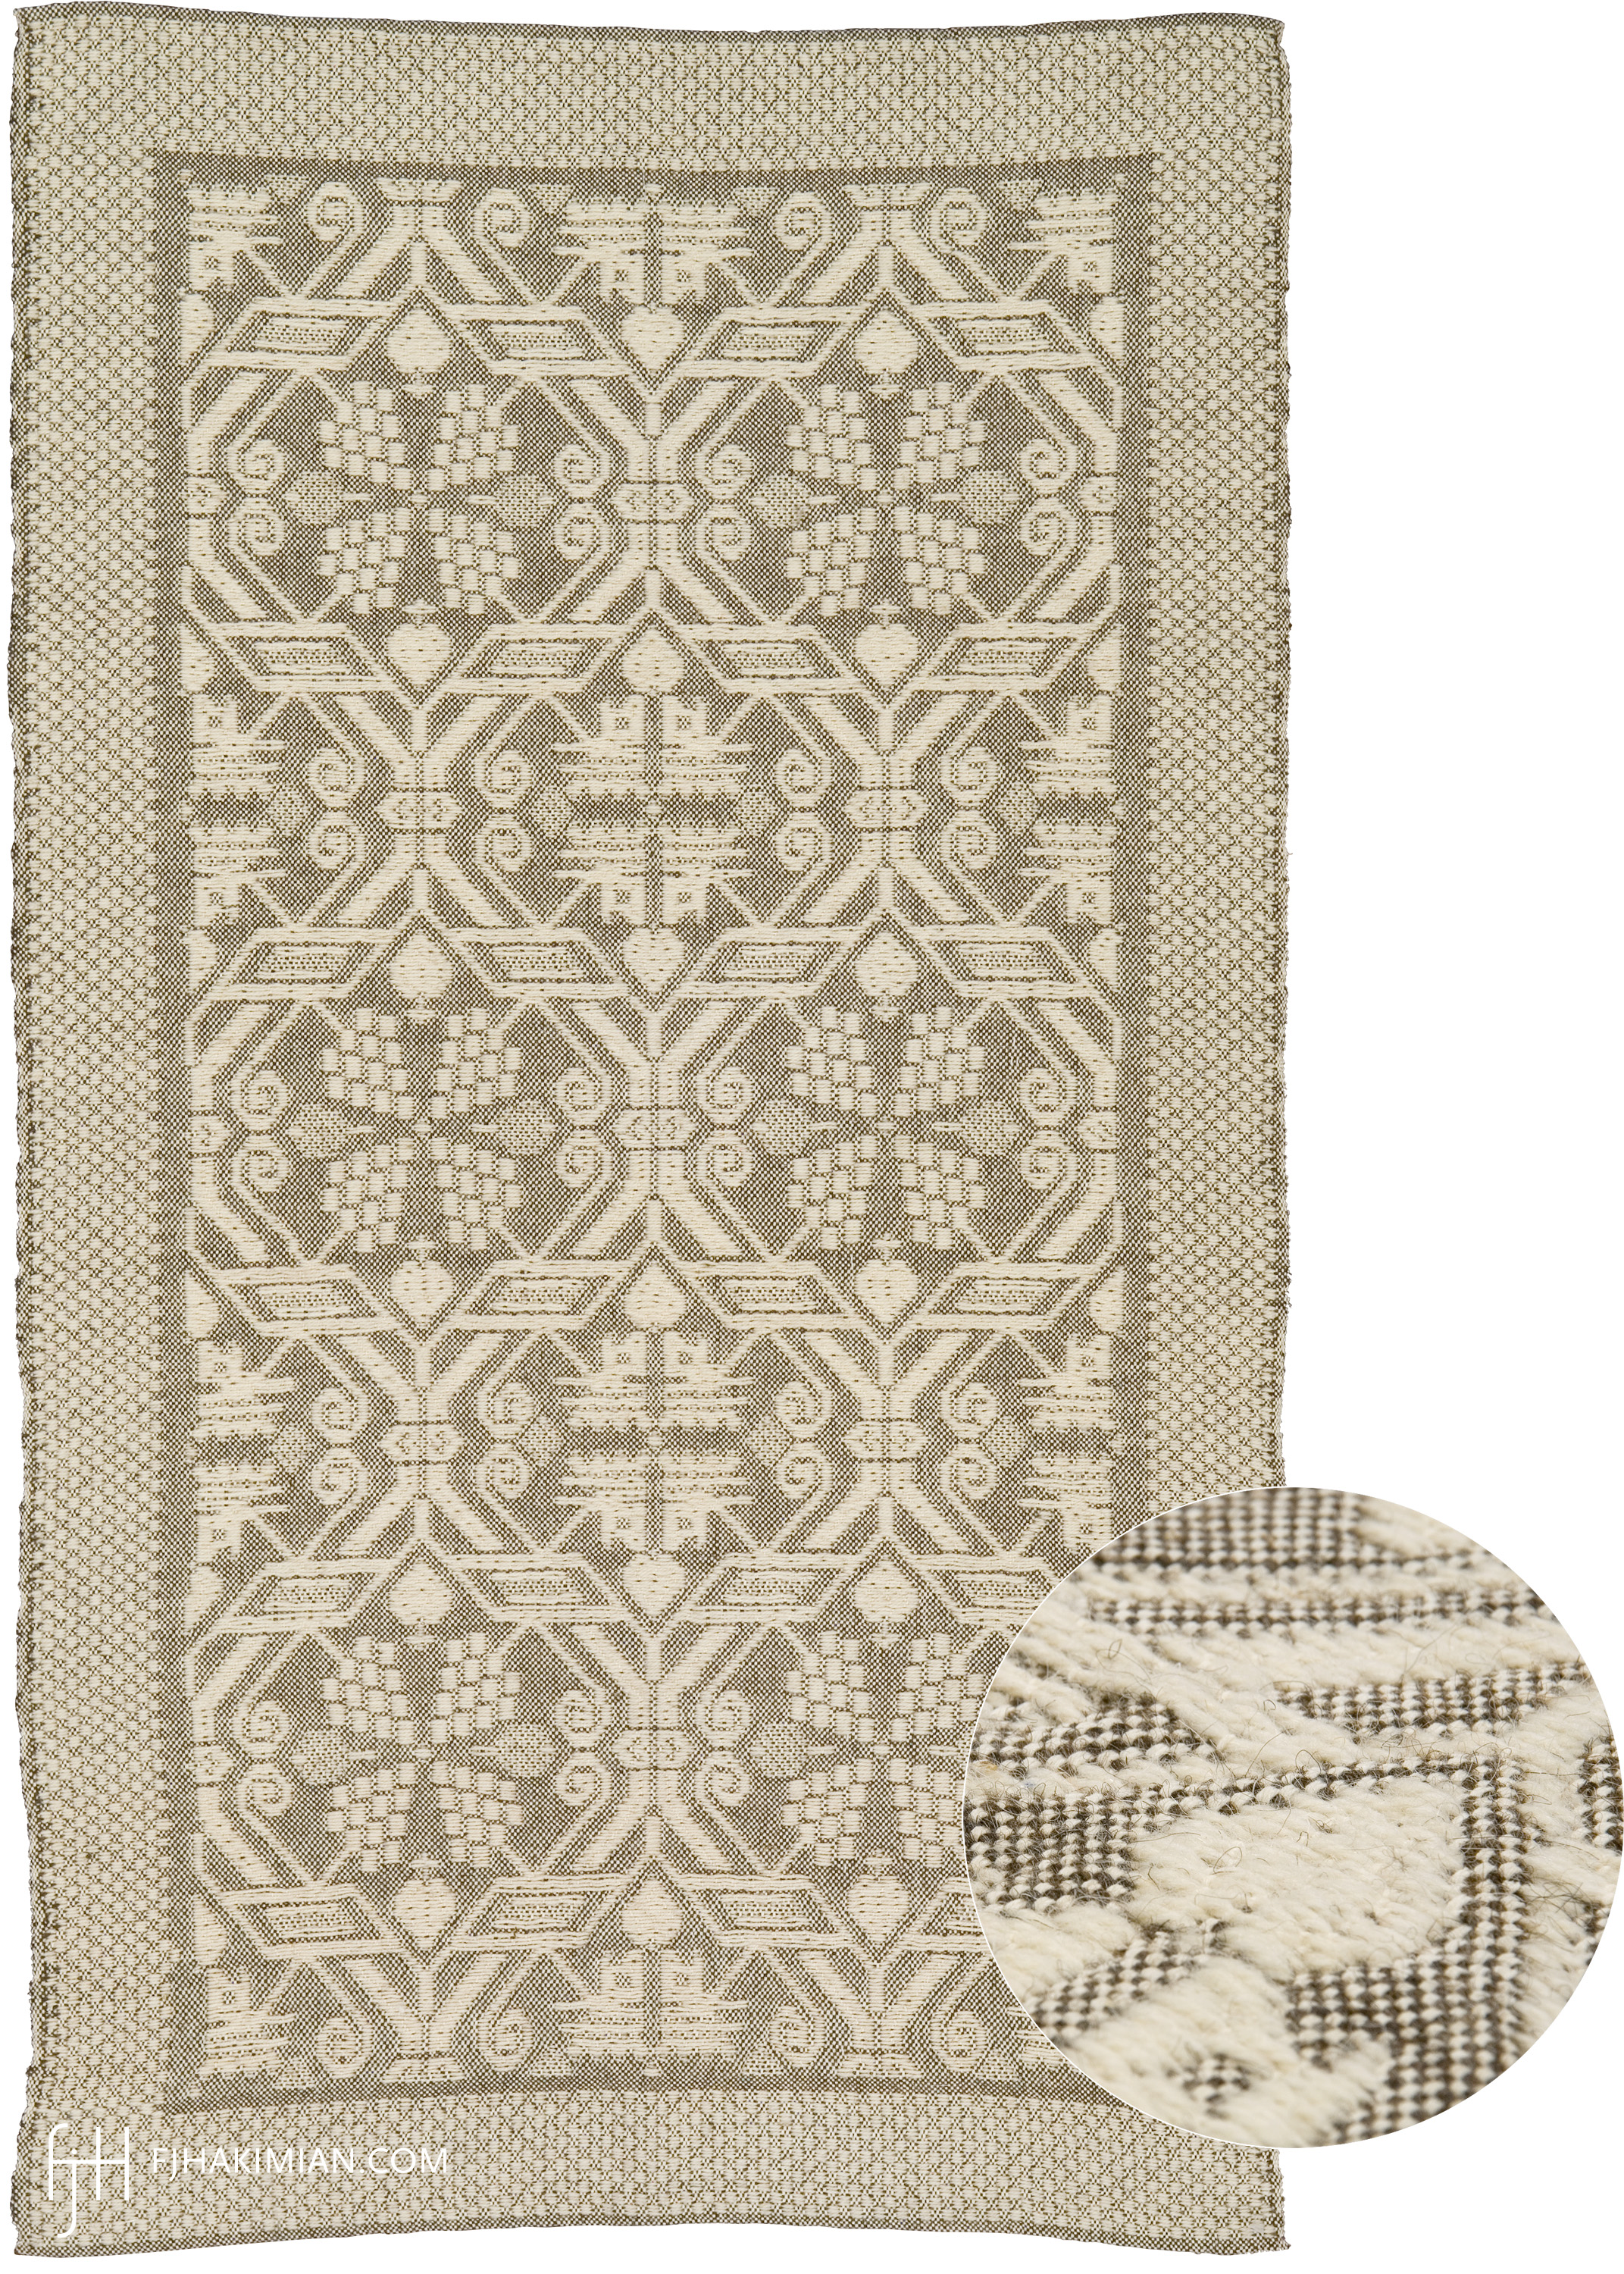 25291 | | IF-310 Tauledda -Sa Ide Design | Custom Sardinian Carpet | FJ Hakimian | Carpet Gallery in NYC